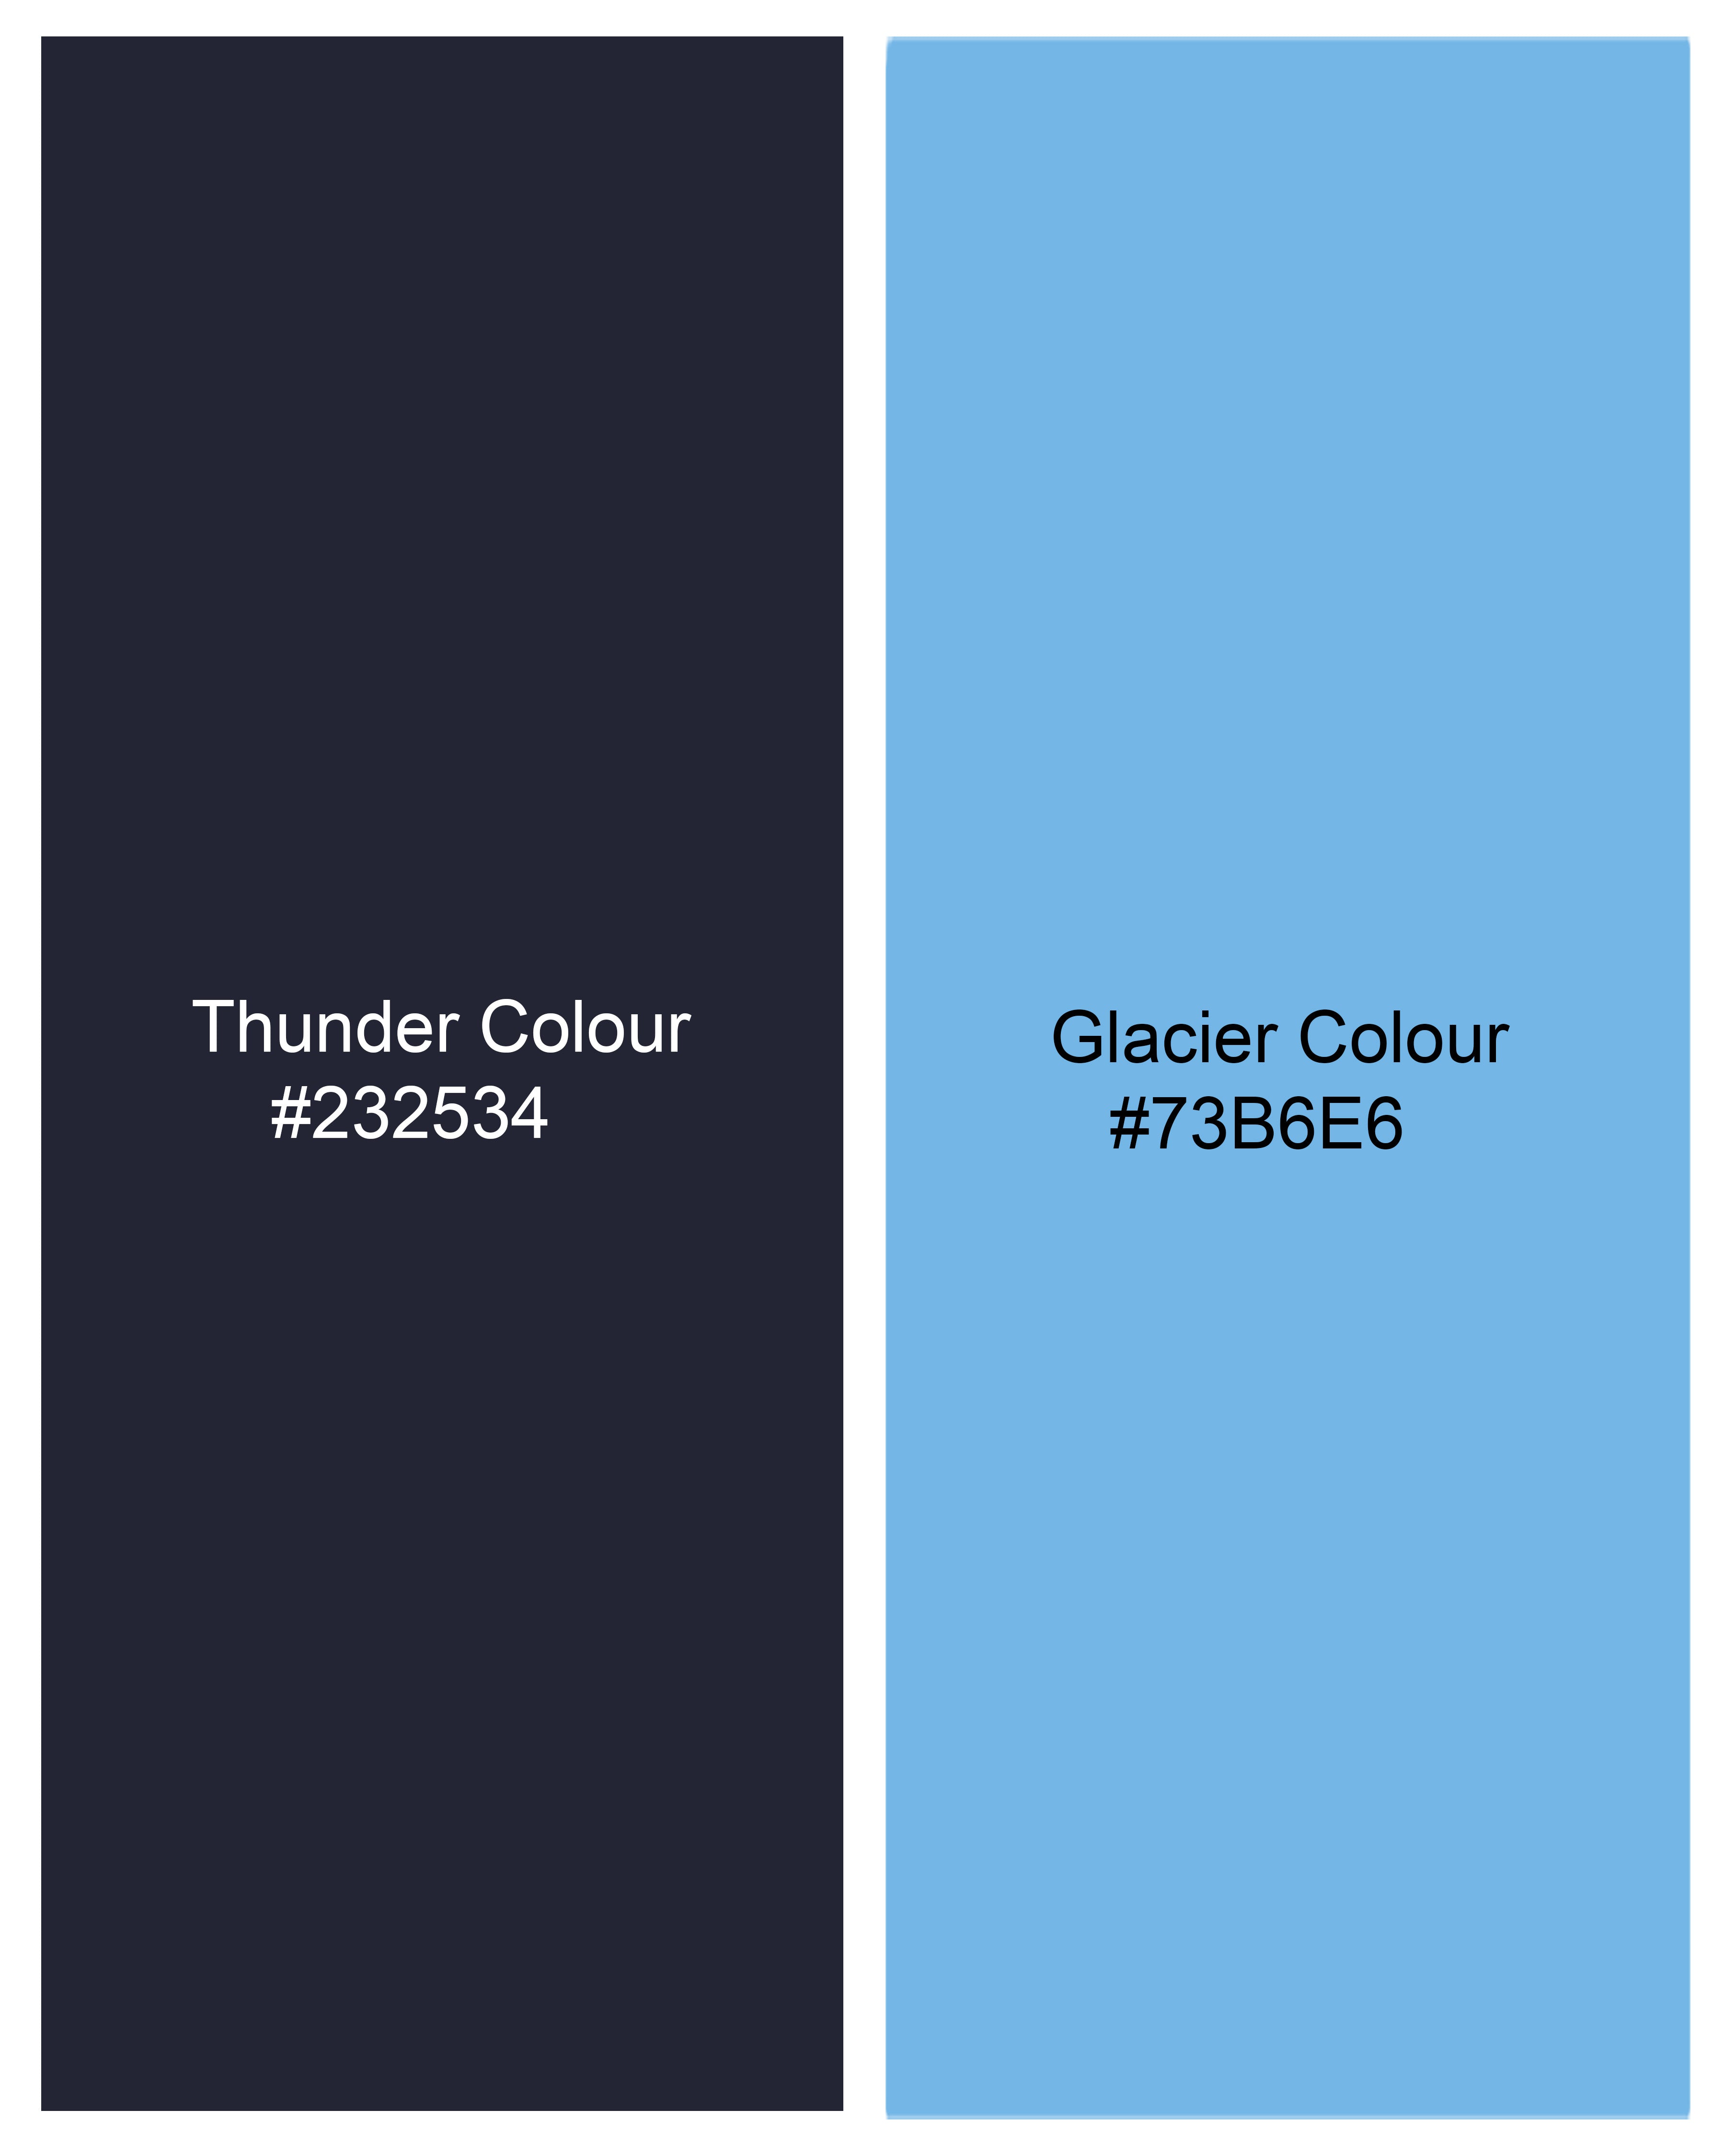 Thunder Navy Blue with Glacier Blue Marble Printed Super Soft Premium Cotton Shirt  8642-BLK-38,8642-BLK-H-38,8642-BLK-39,8642-BLK-H-39,8642-BLK-40,8642-BLK-H-40,8642-BLK-42,8642-BLK-H-42,8642-BLK-44,8642-BLK-H-44,8642-BLK-46,8642-BLK-H-46,8642-BLK-48,8642-BLK-H-48,8642-BLK-50,8642-BLK-H-50,8642-BLK-52,8642-BLK-H-52